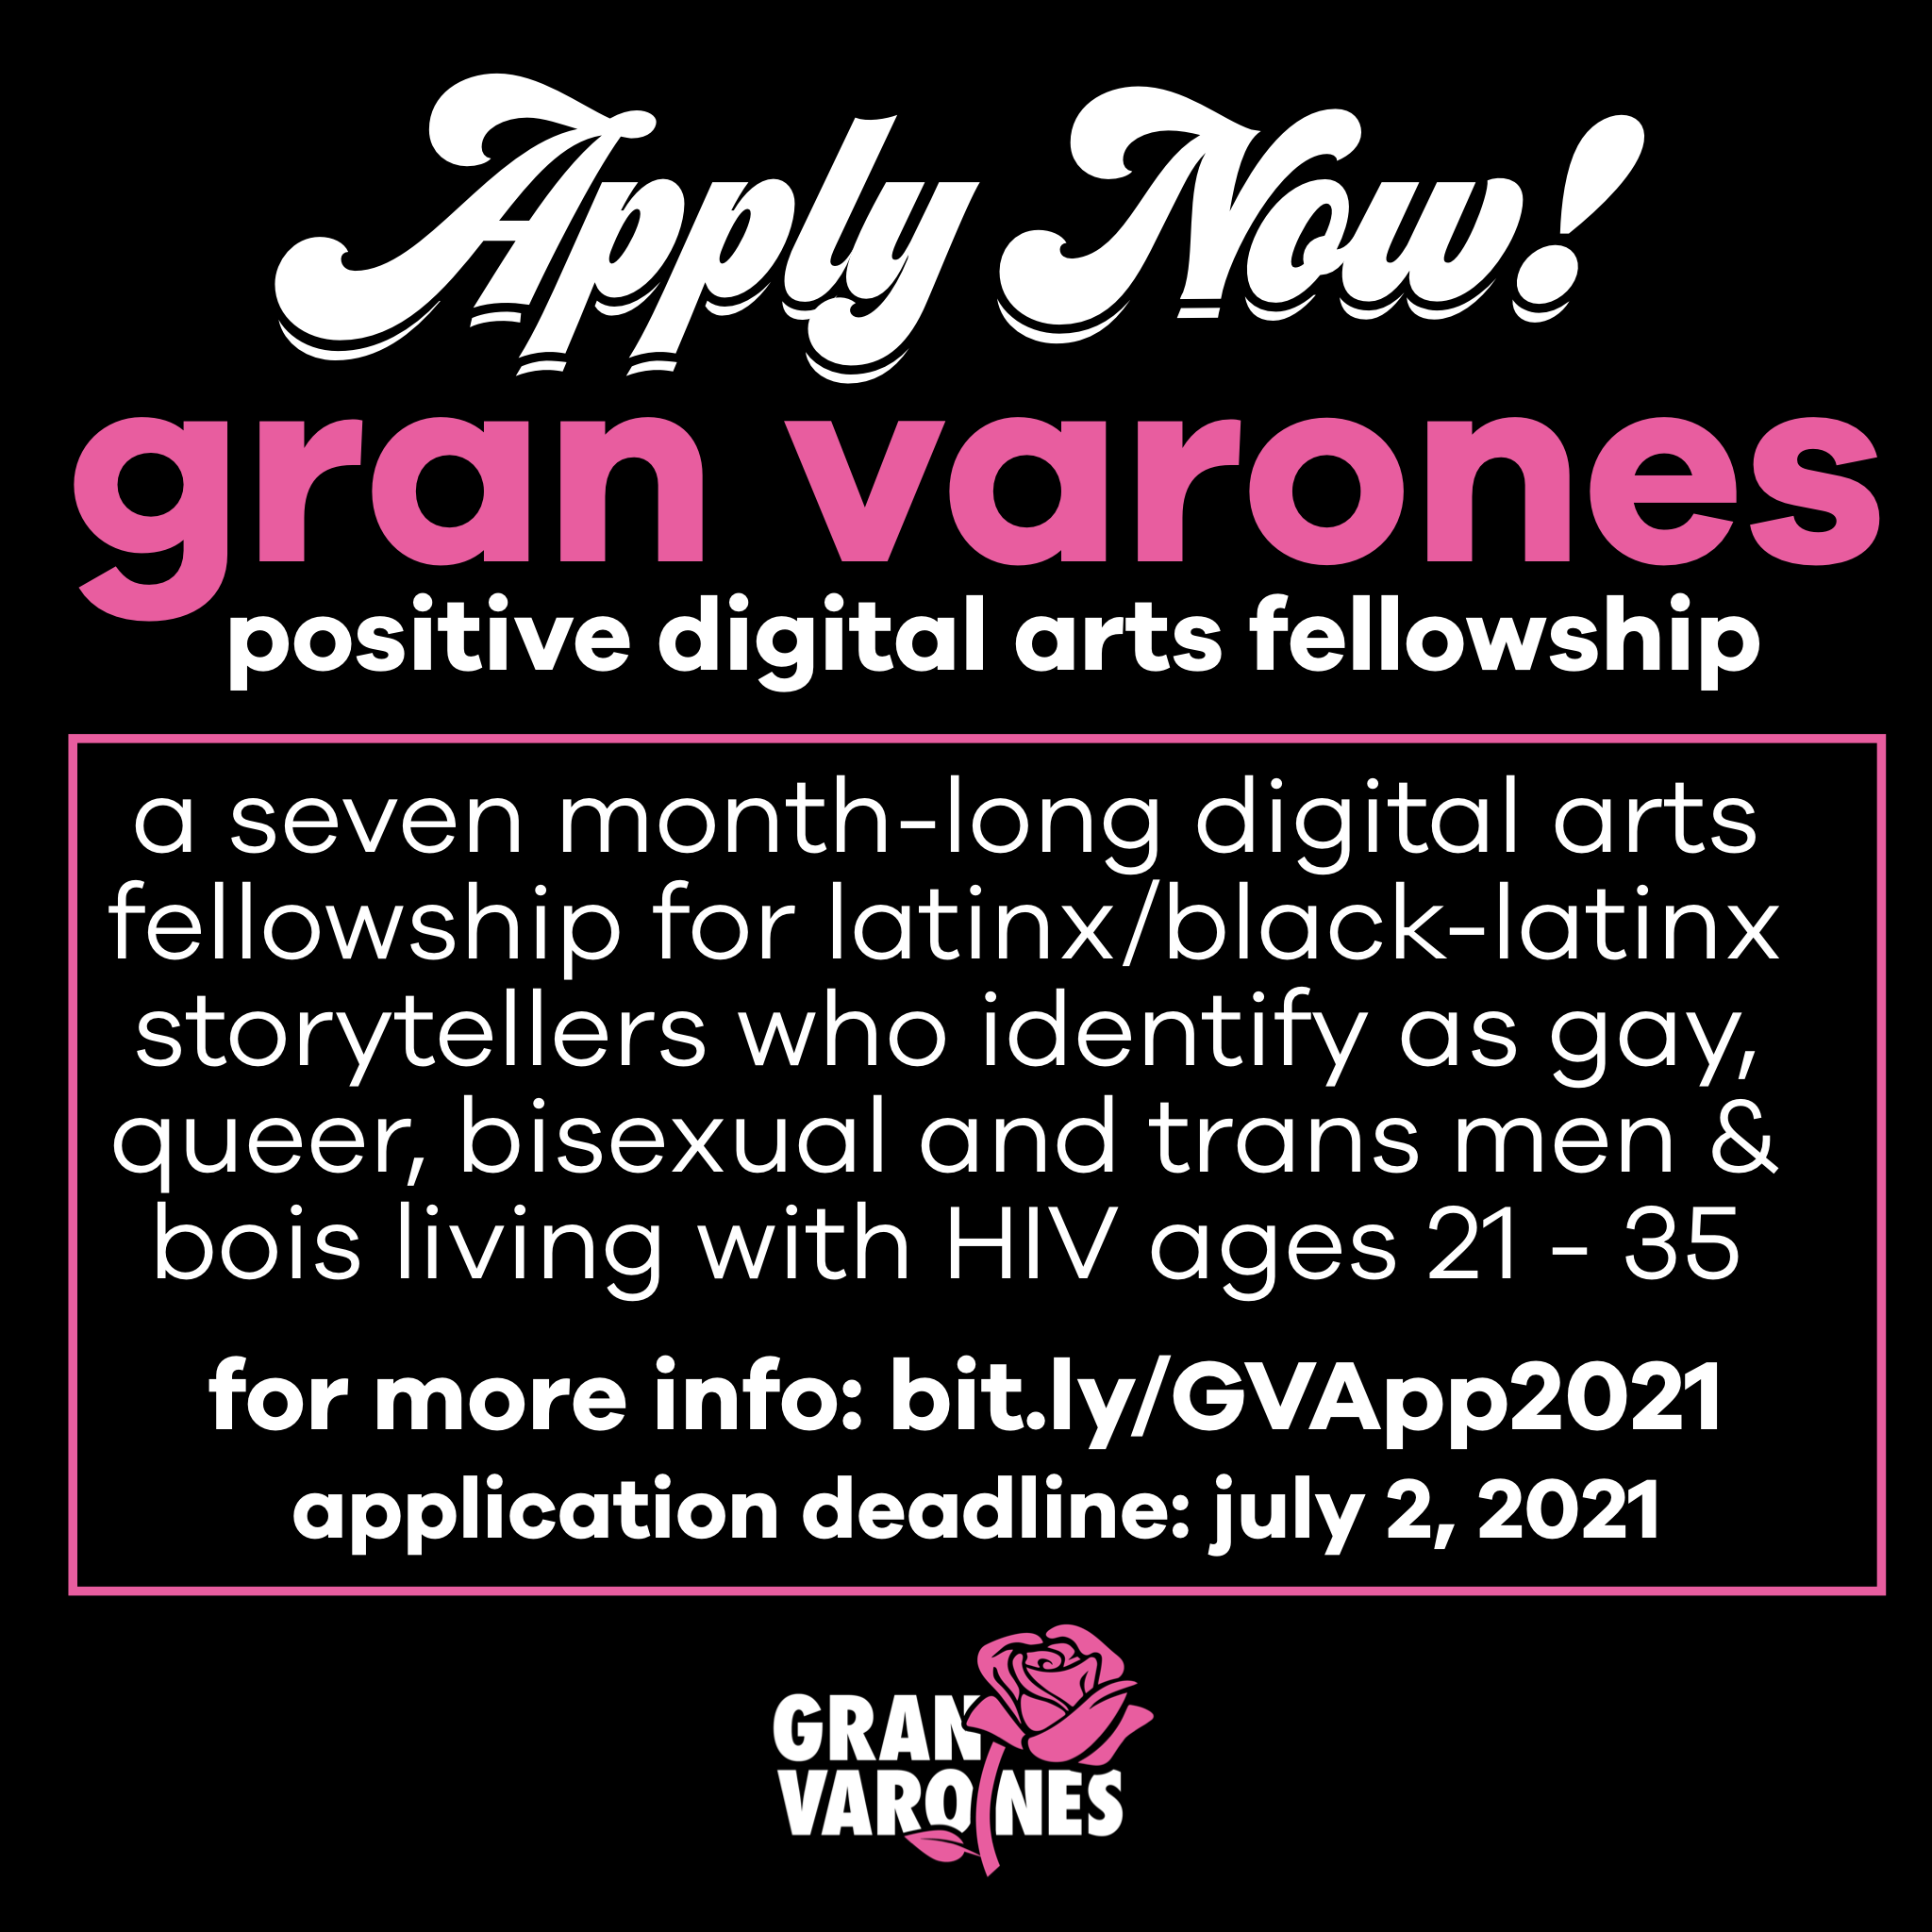 APPLY NOW! Gran Varones Positive Digital Arts Fellowship